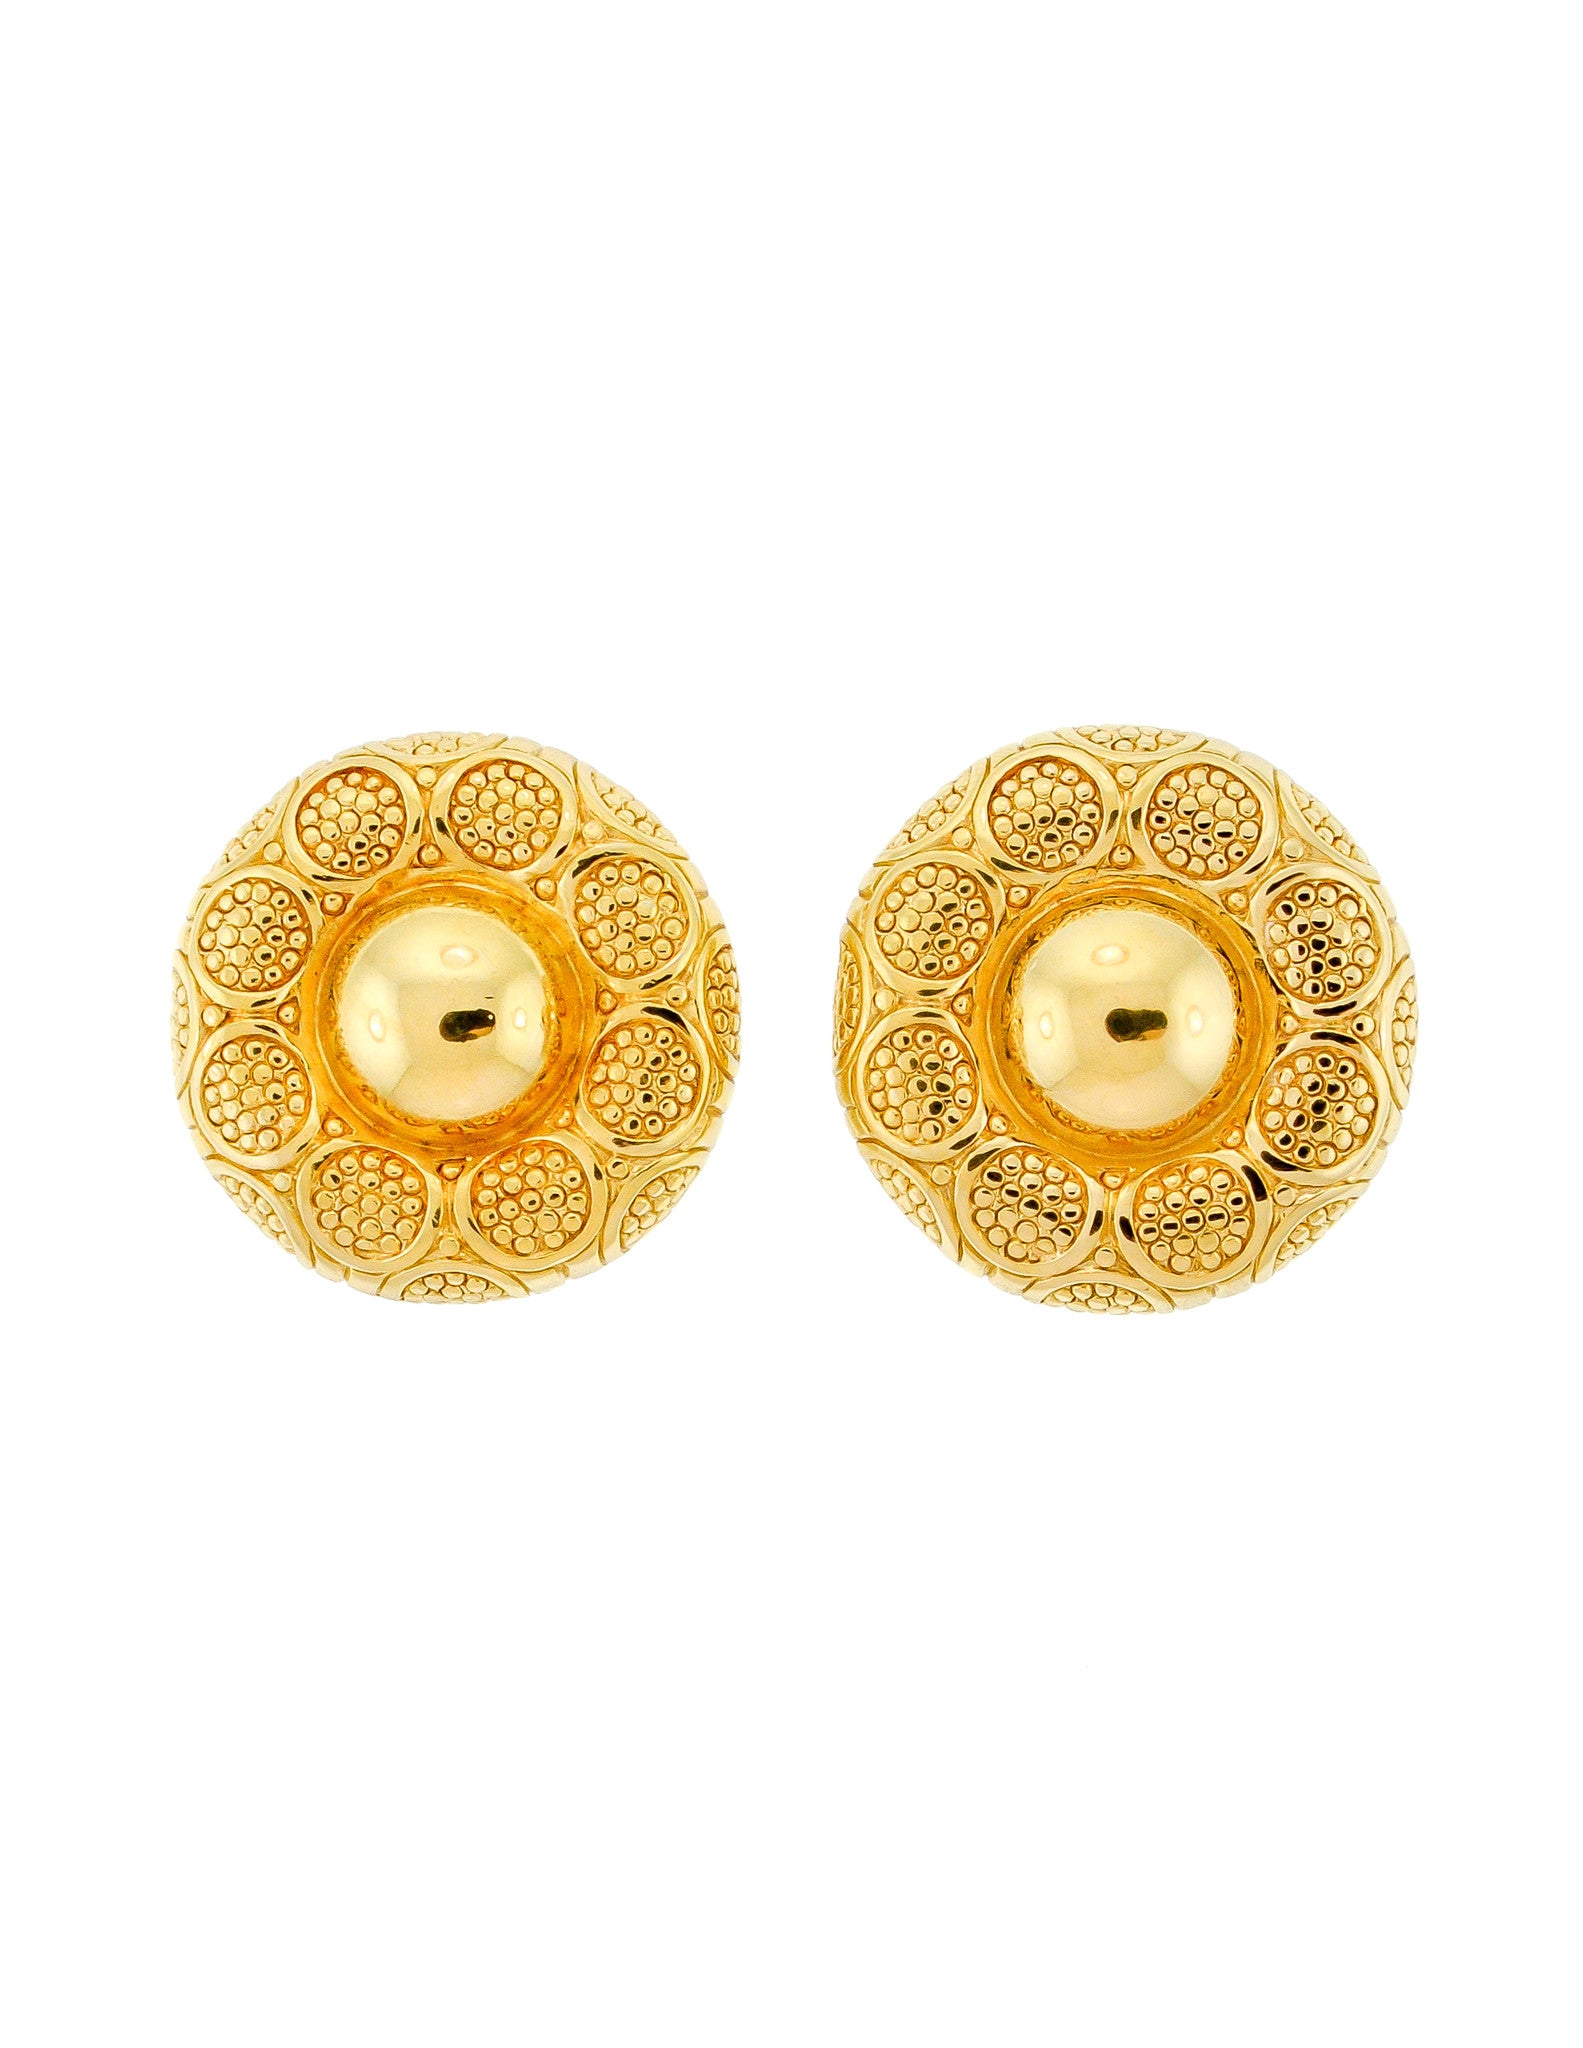 Christian Dior Gold Medallion Earrings - Amarcord Vintage Fashion
 - 1